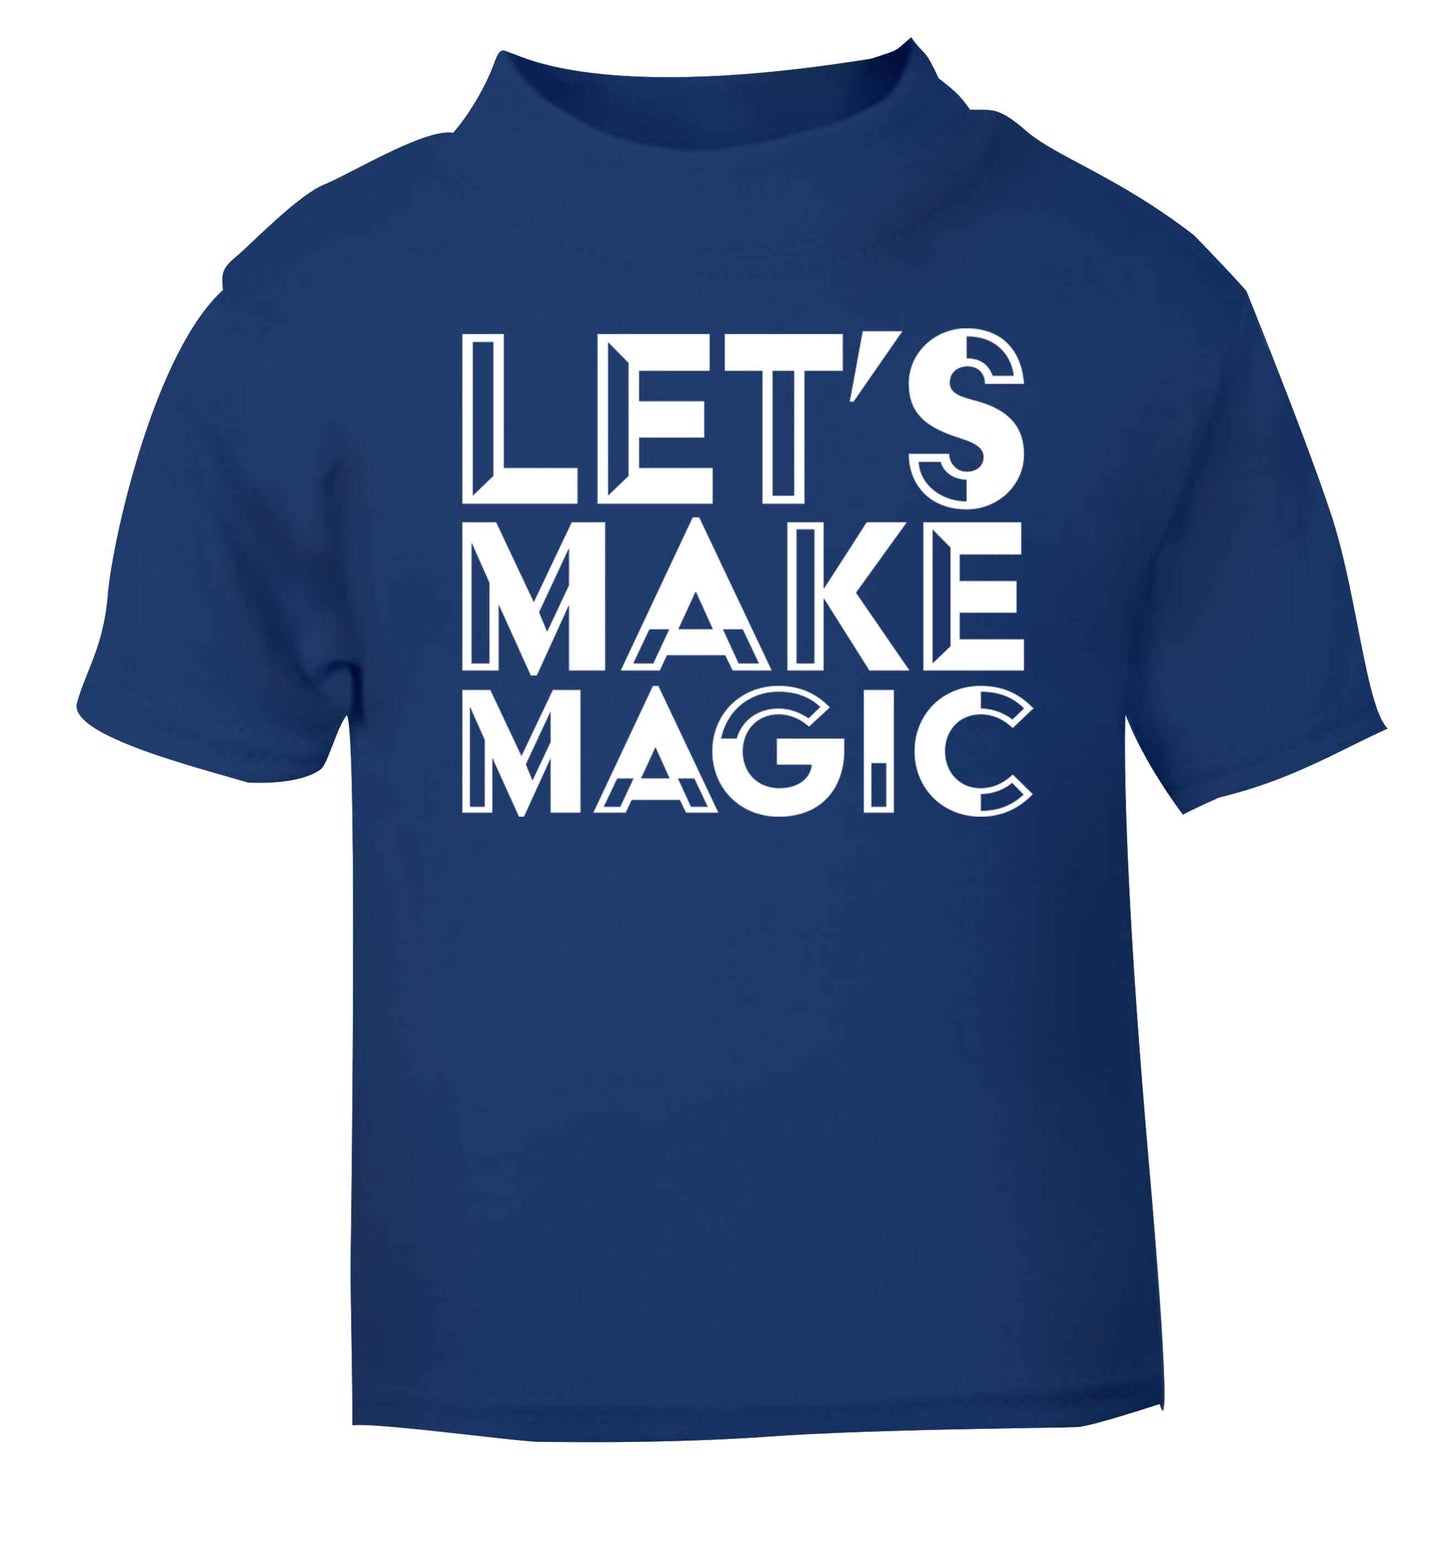 Let's make magic blue baby toddler Tshirt 2 Years